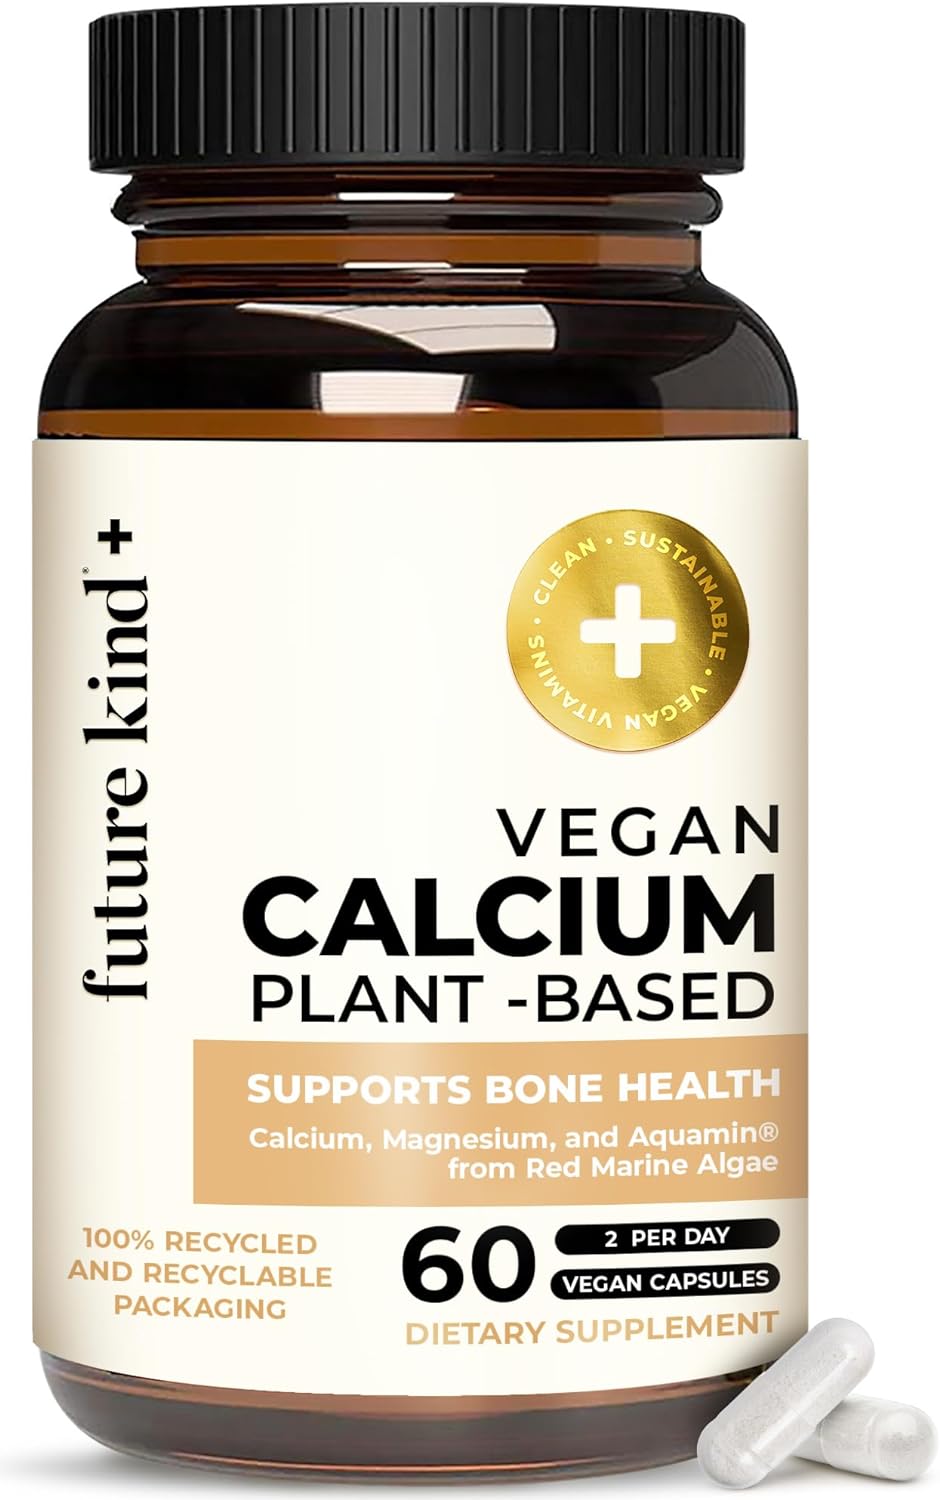 Future Kind Vegan Calcium Supplement (60 Capsules) - Plant-Based Calcium Magnesium Supplement Sourced from Iceland for Teeth and Bone Support - Calcium Supplements for Women & Men